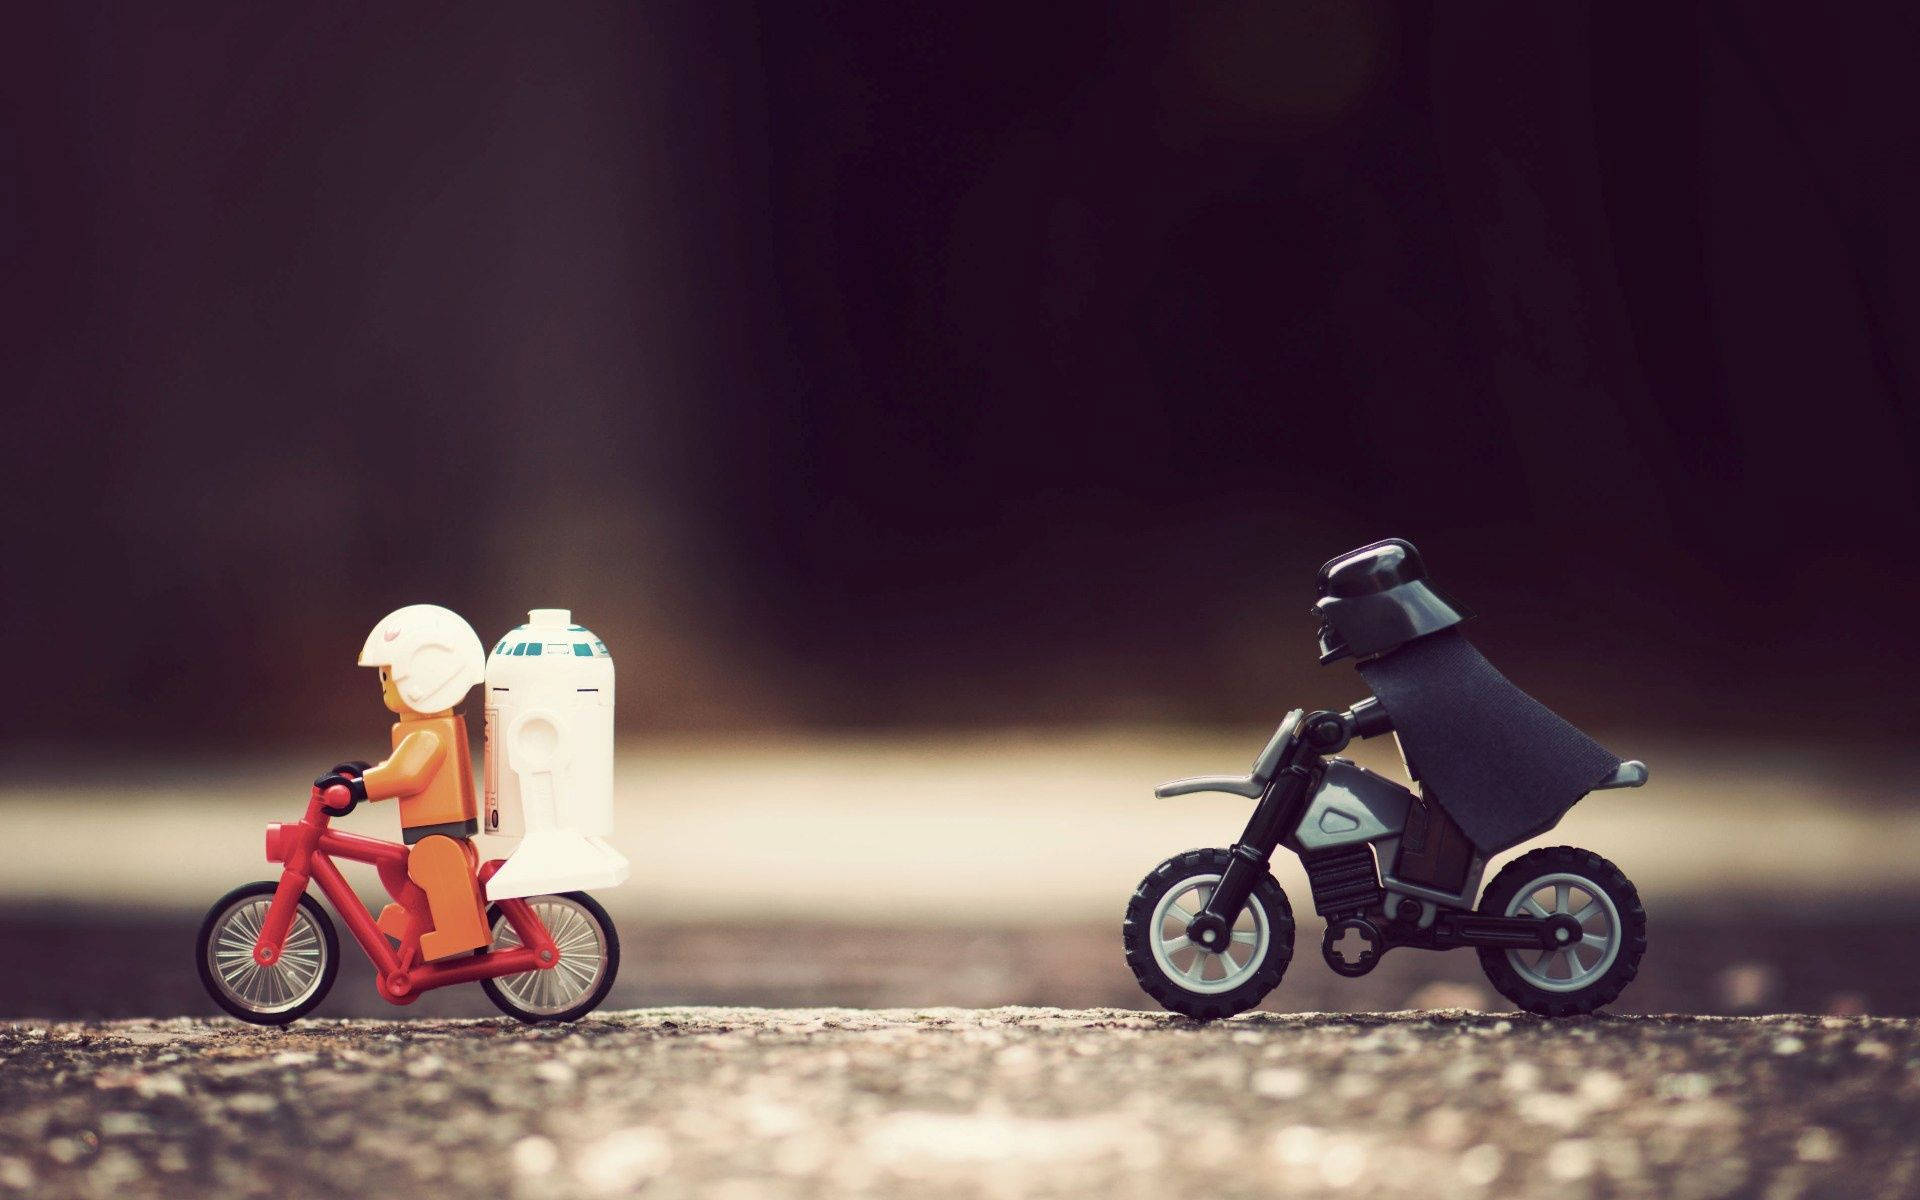 Cute Chasing Star Wars Lego Background